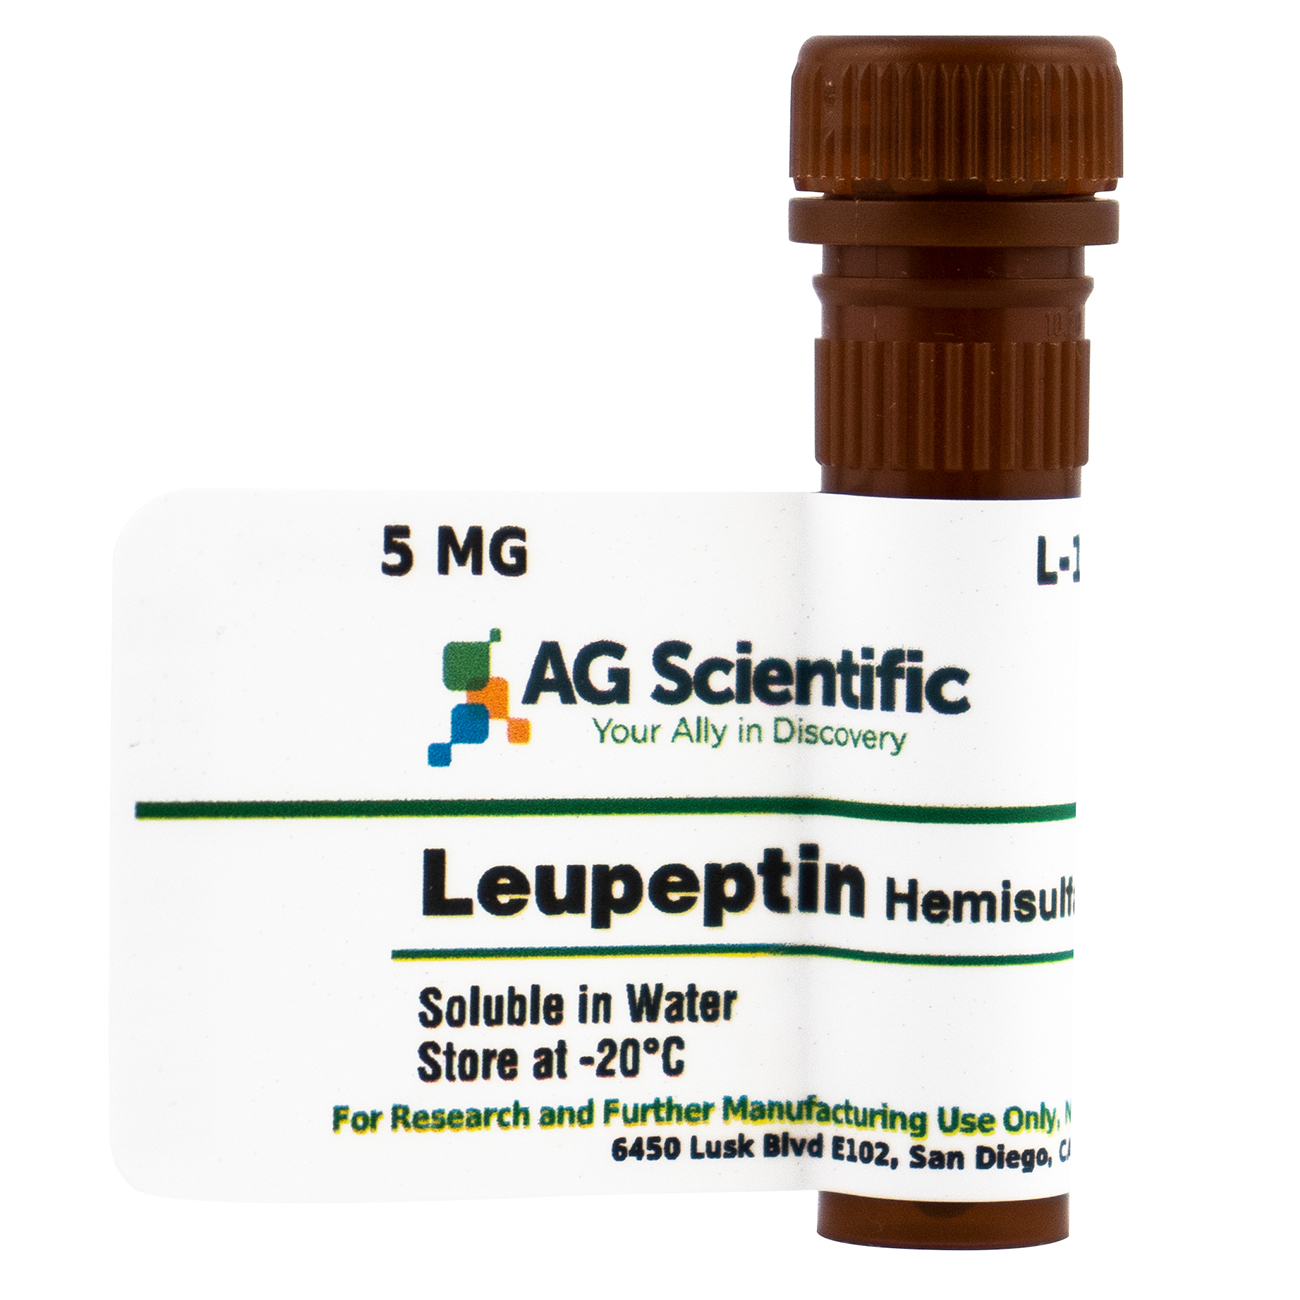 l-1165-5mg-leupeptin-hemisulfate-5-mg